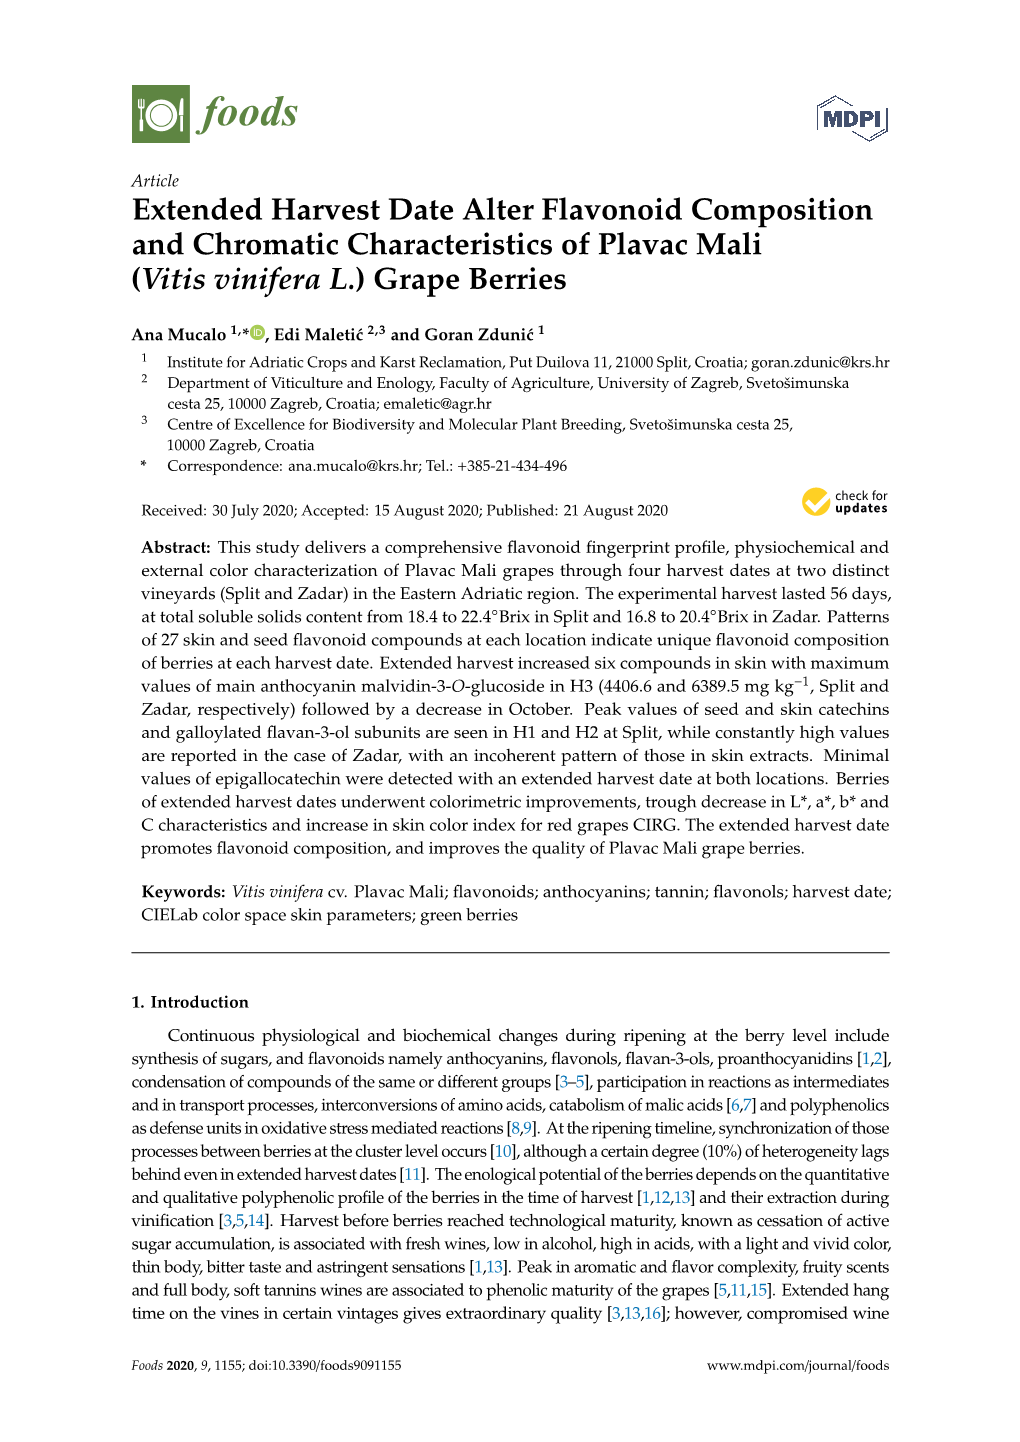 Extended Harvest Date Alter Flavonoid Composition and Chromatic Characteristics of Plavac Mali (Vitis Vinifera L.) Grape Berries